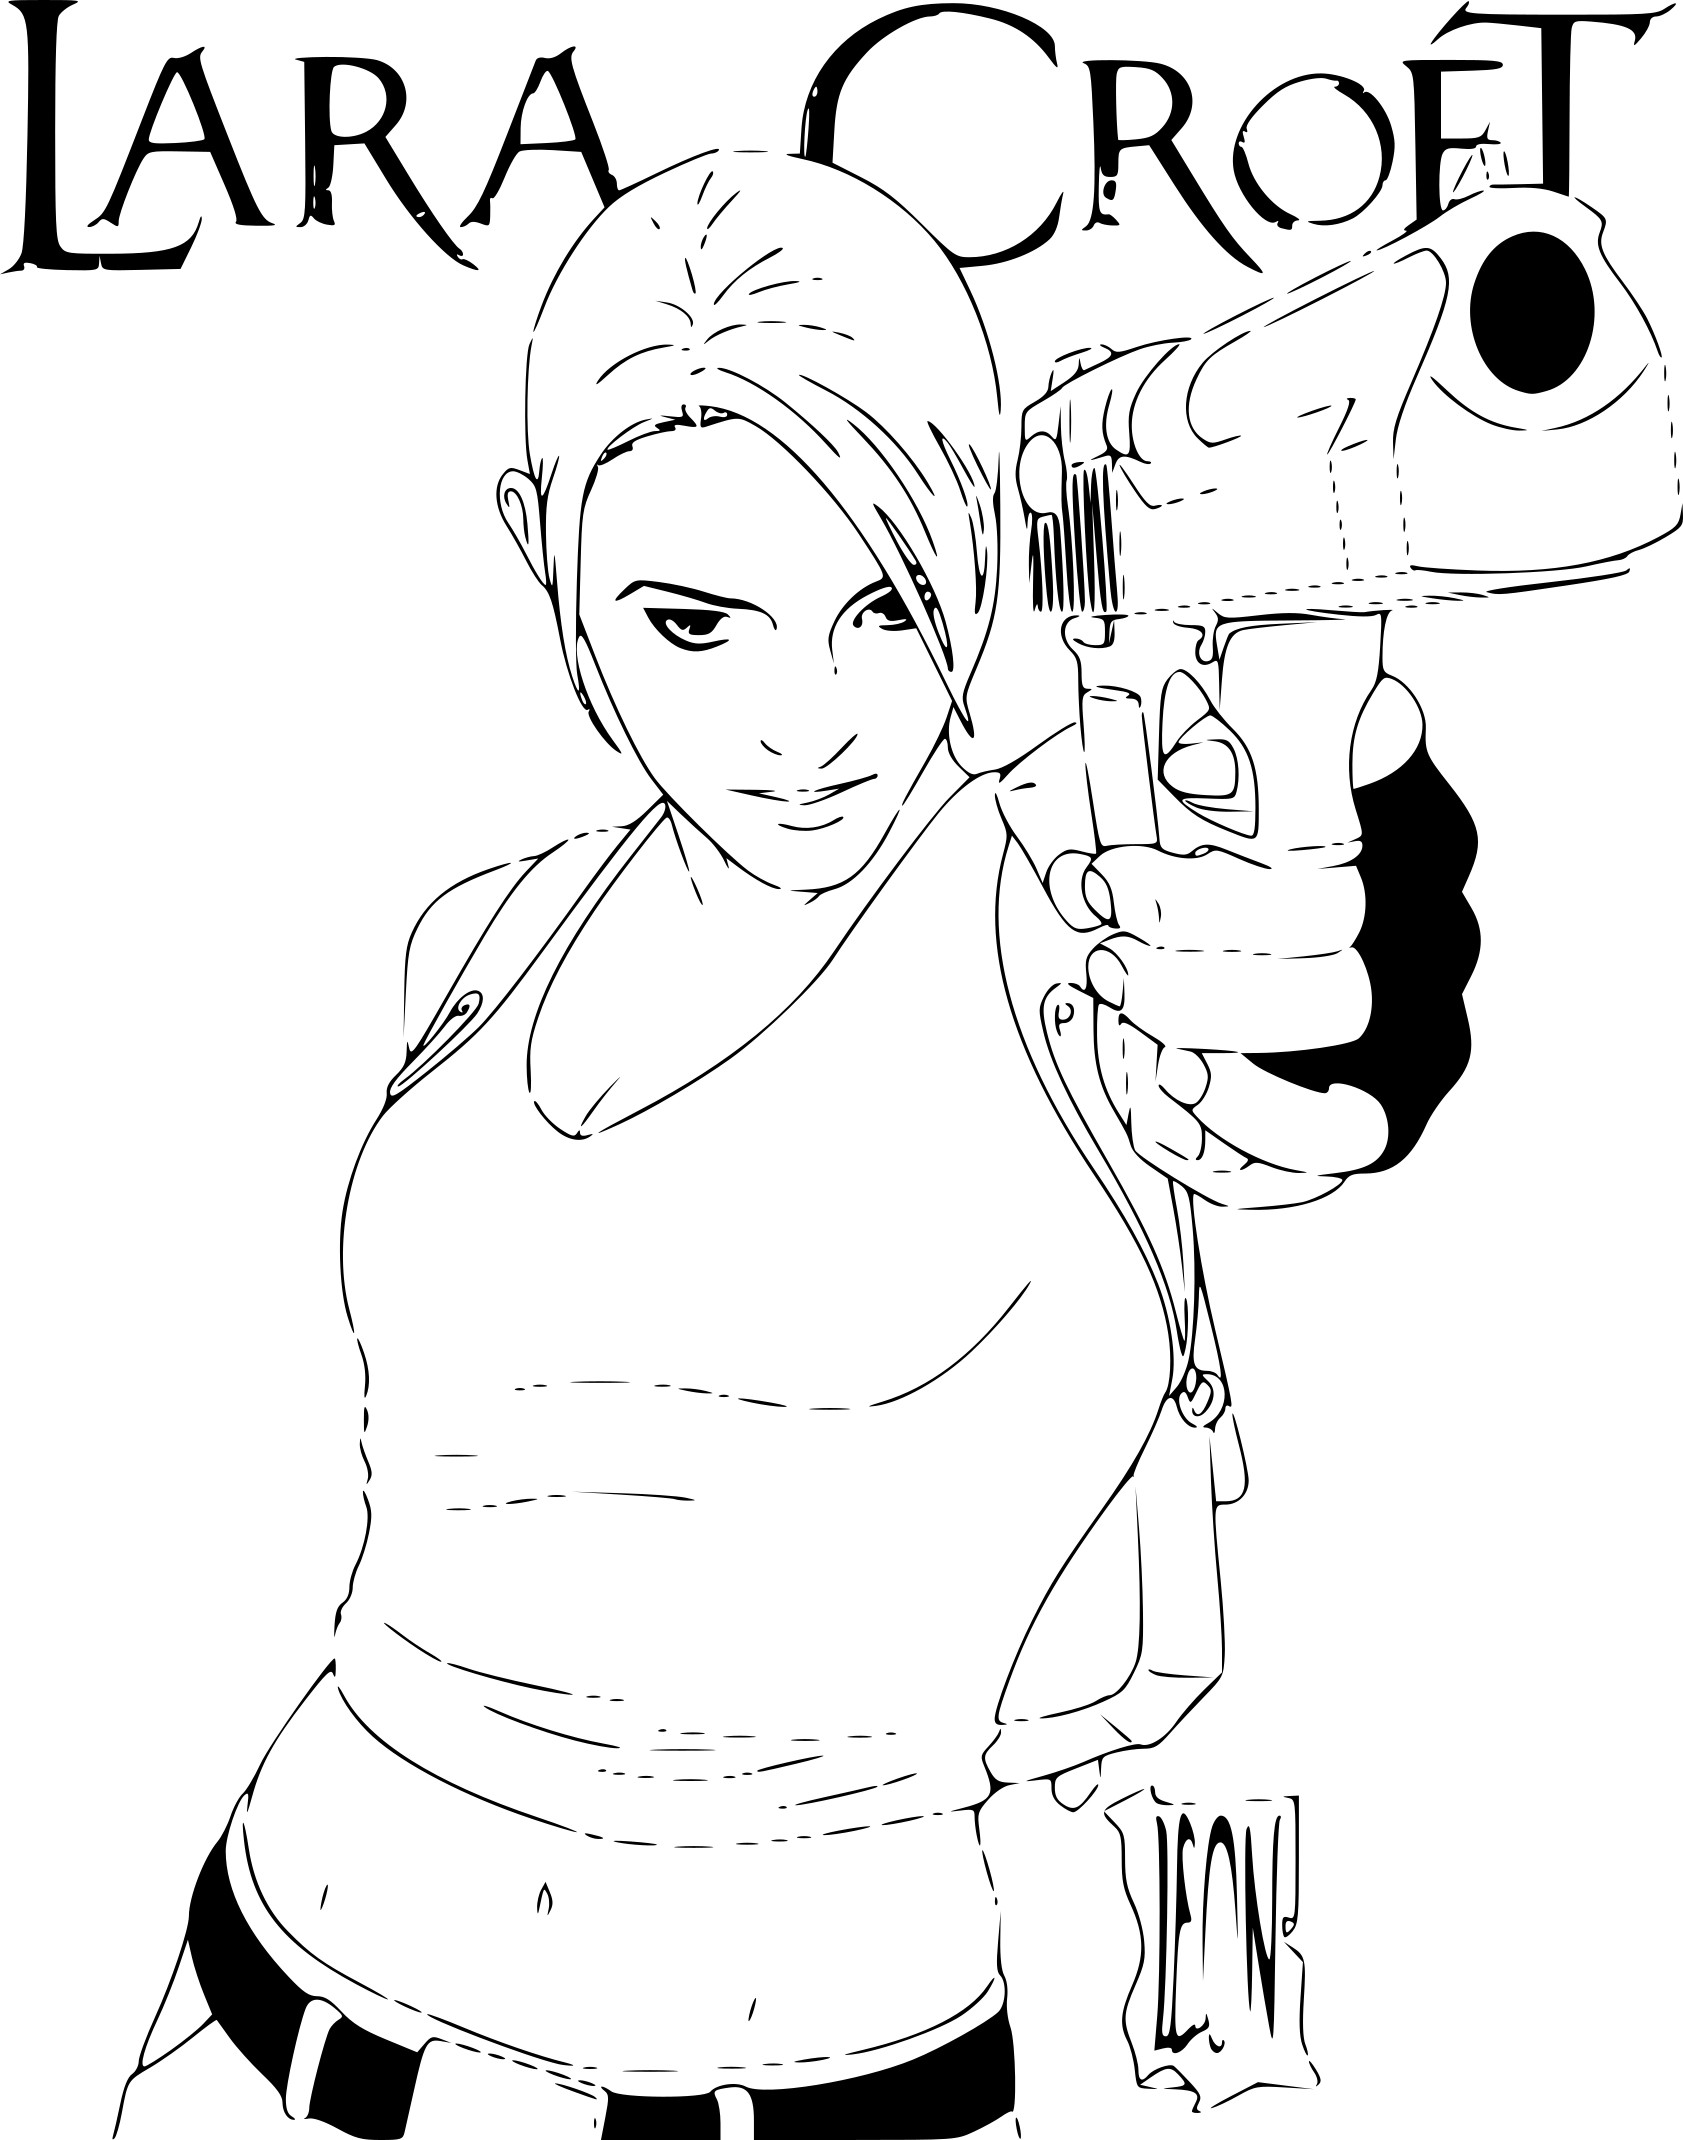 Lara Croft coloring page